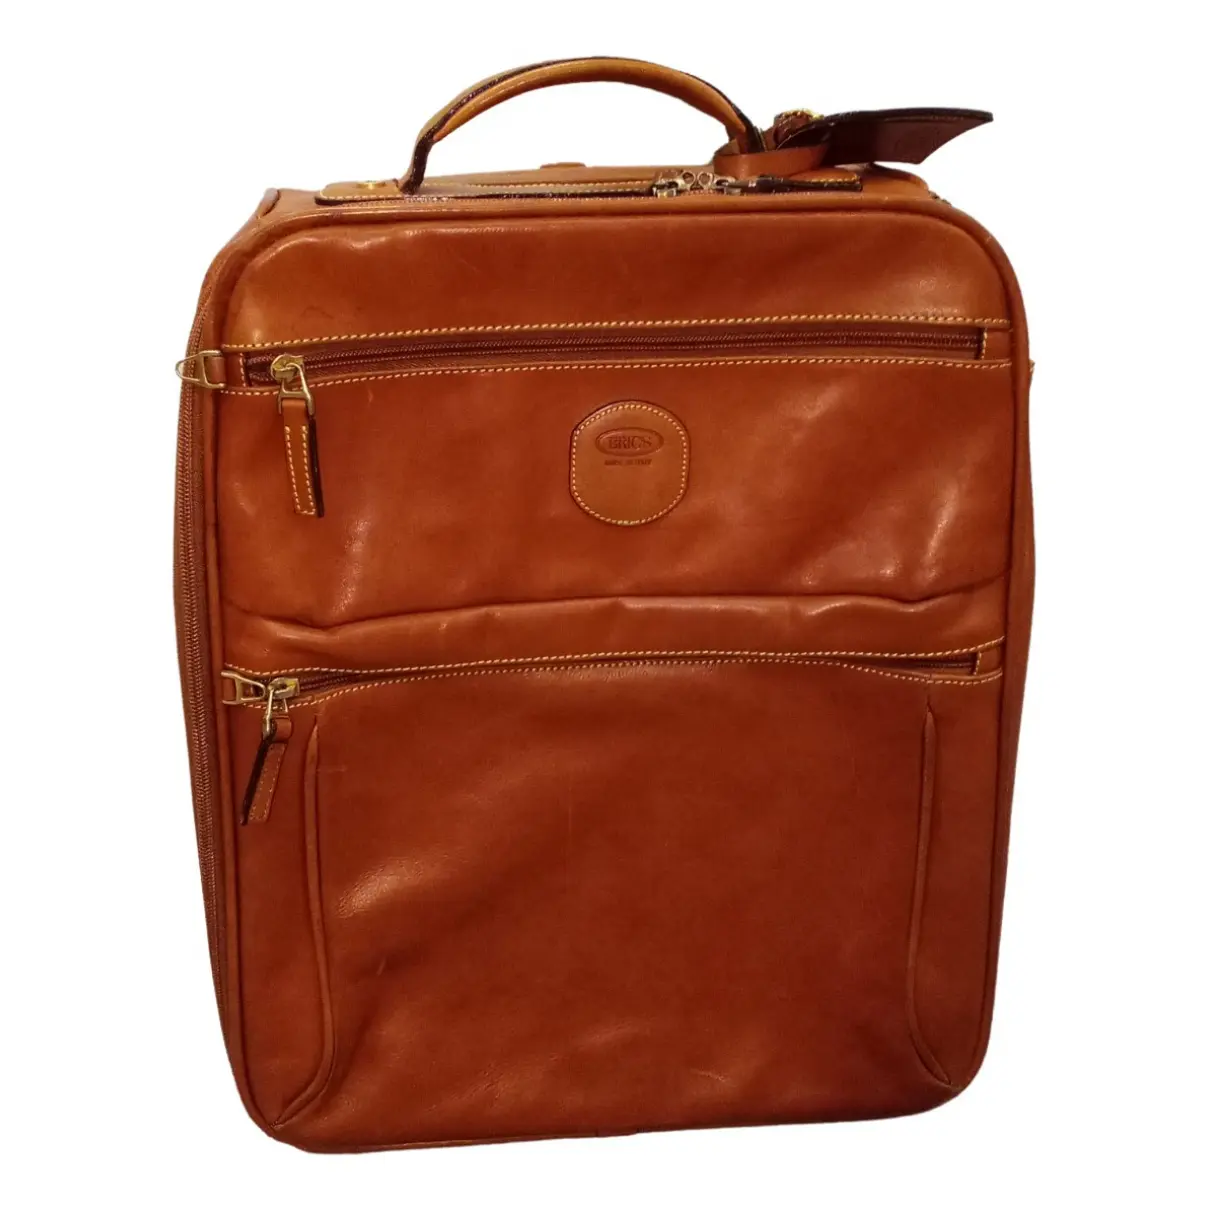 Leather travel bag Bric's